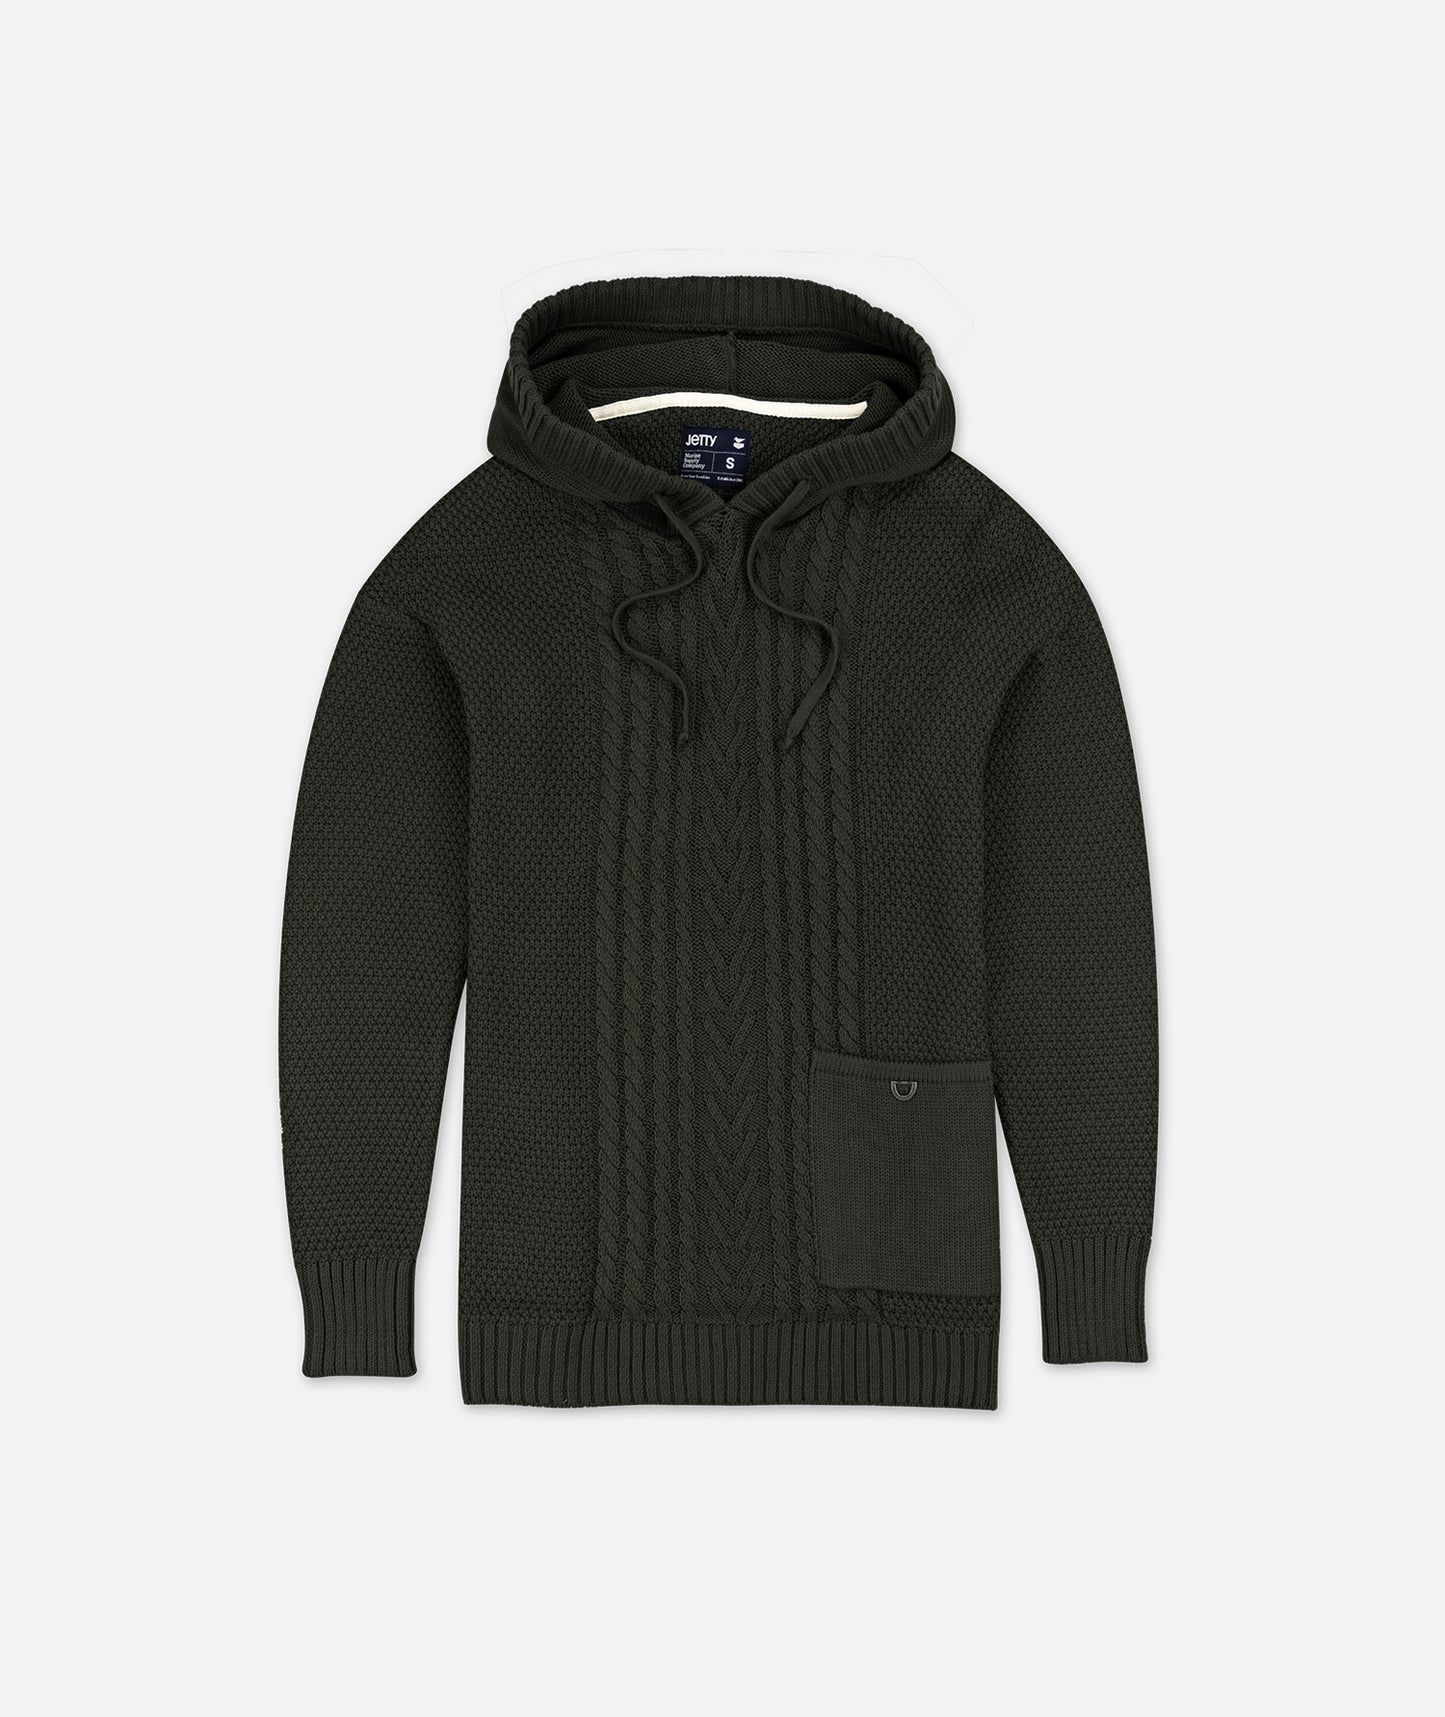 Barnegat Sweater - Charcoal